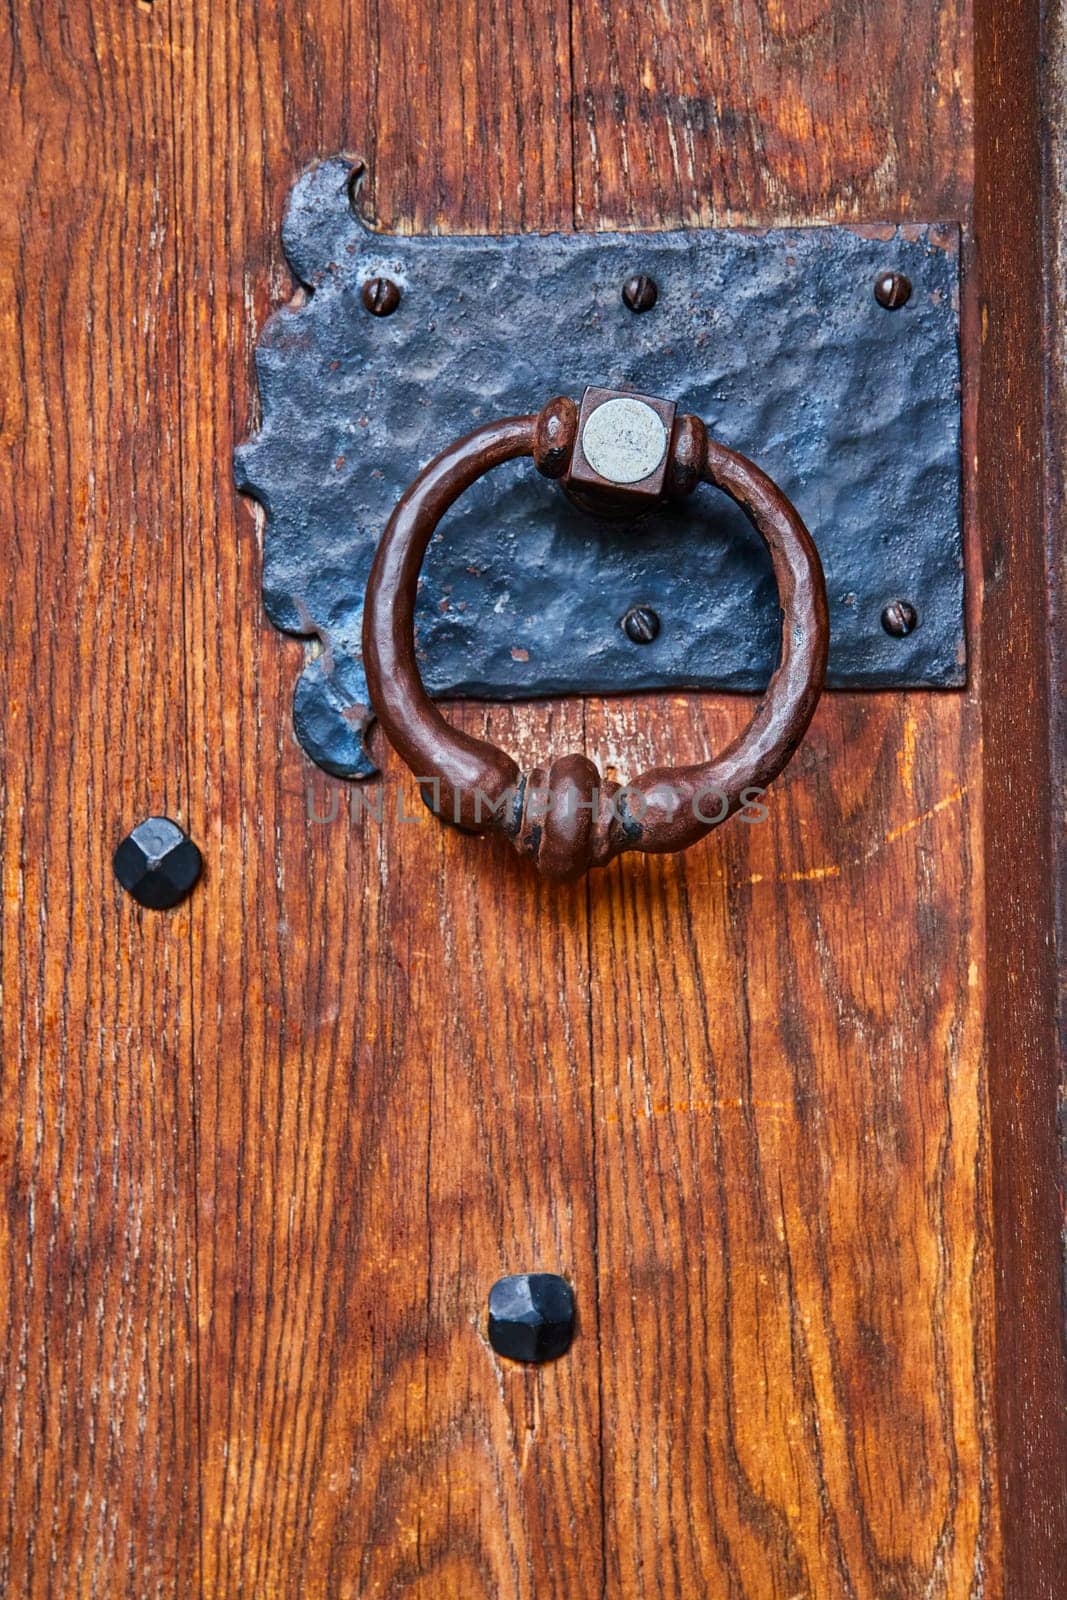 Vintage door knocker on rustic wooden door at Bishop Simon Brute College, showcasing historical architecture.